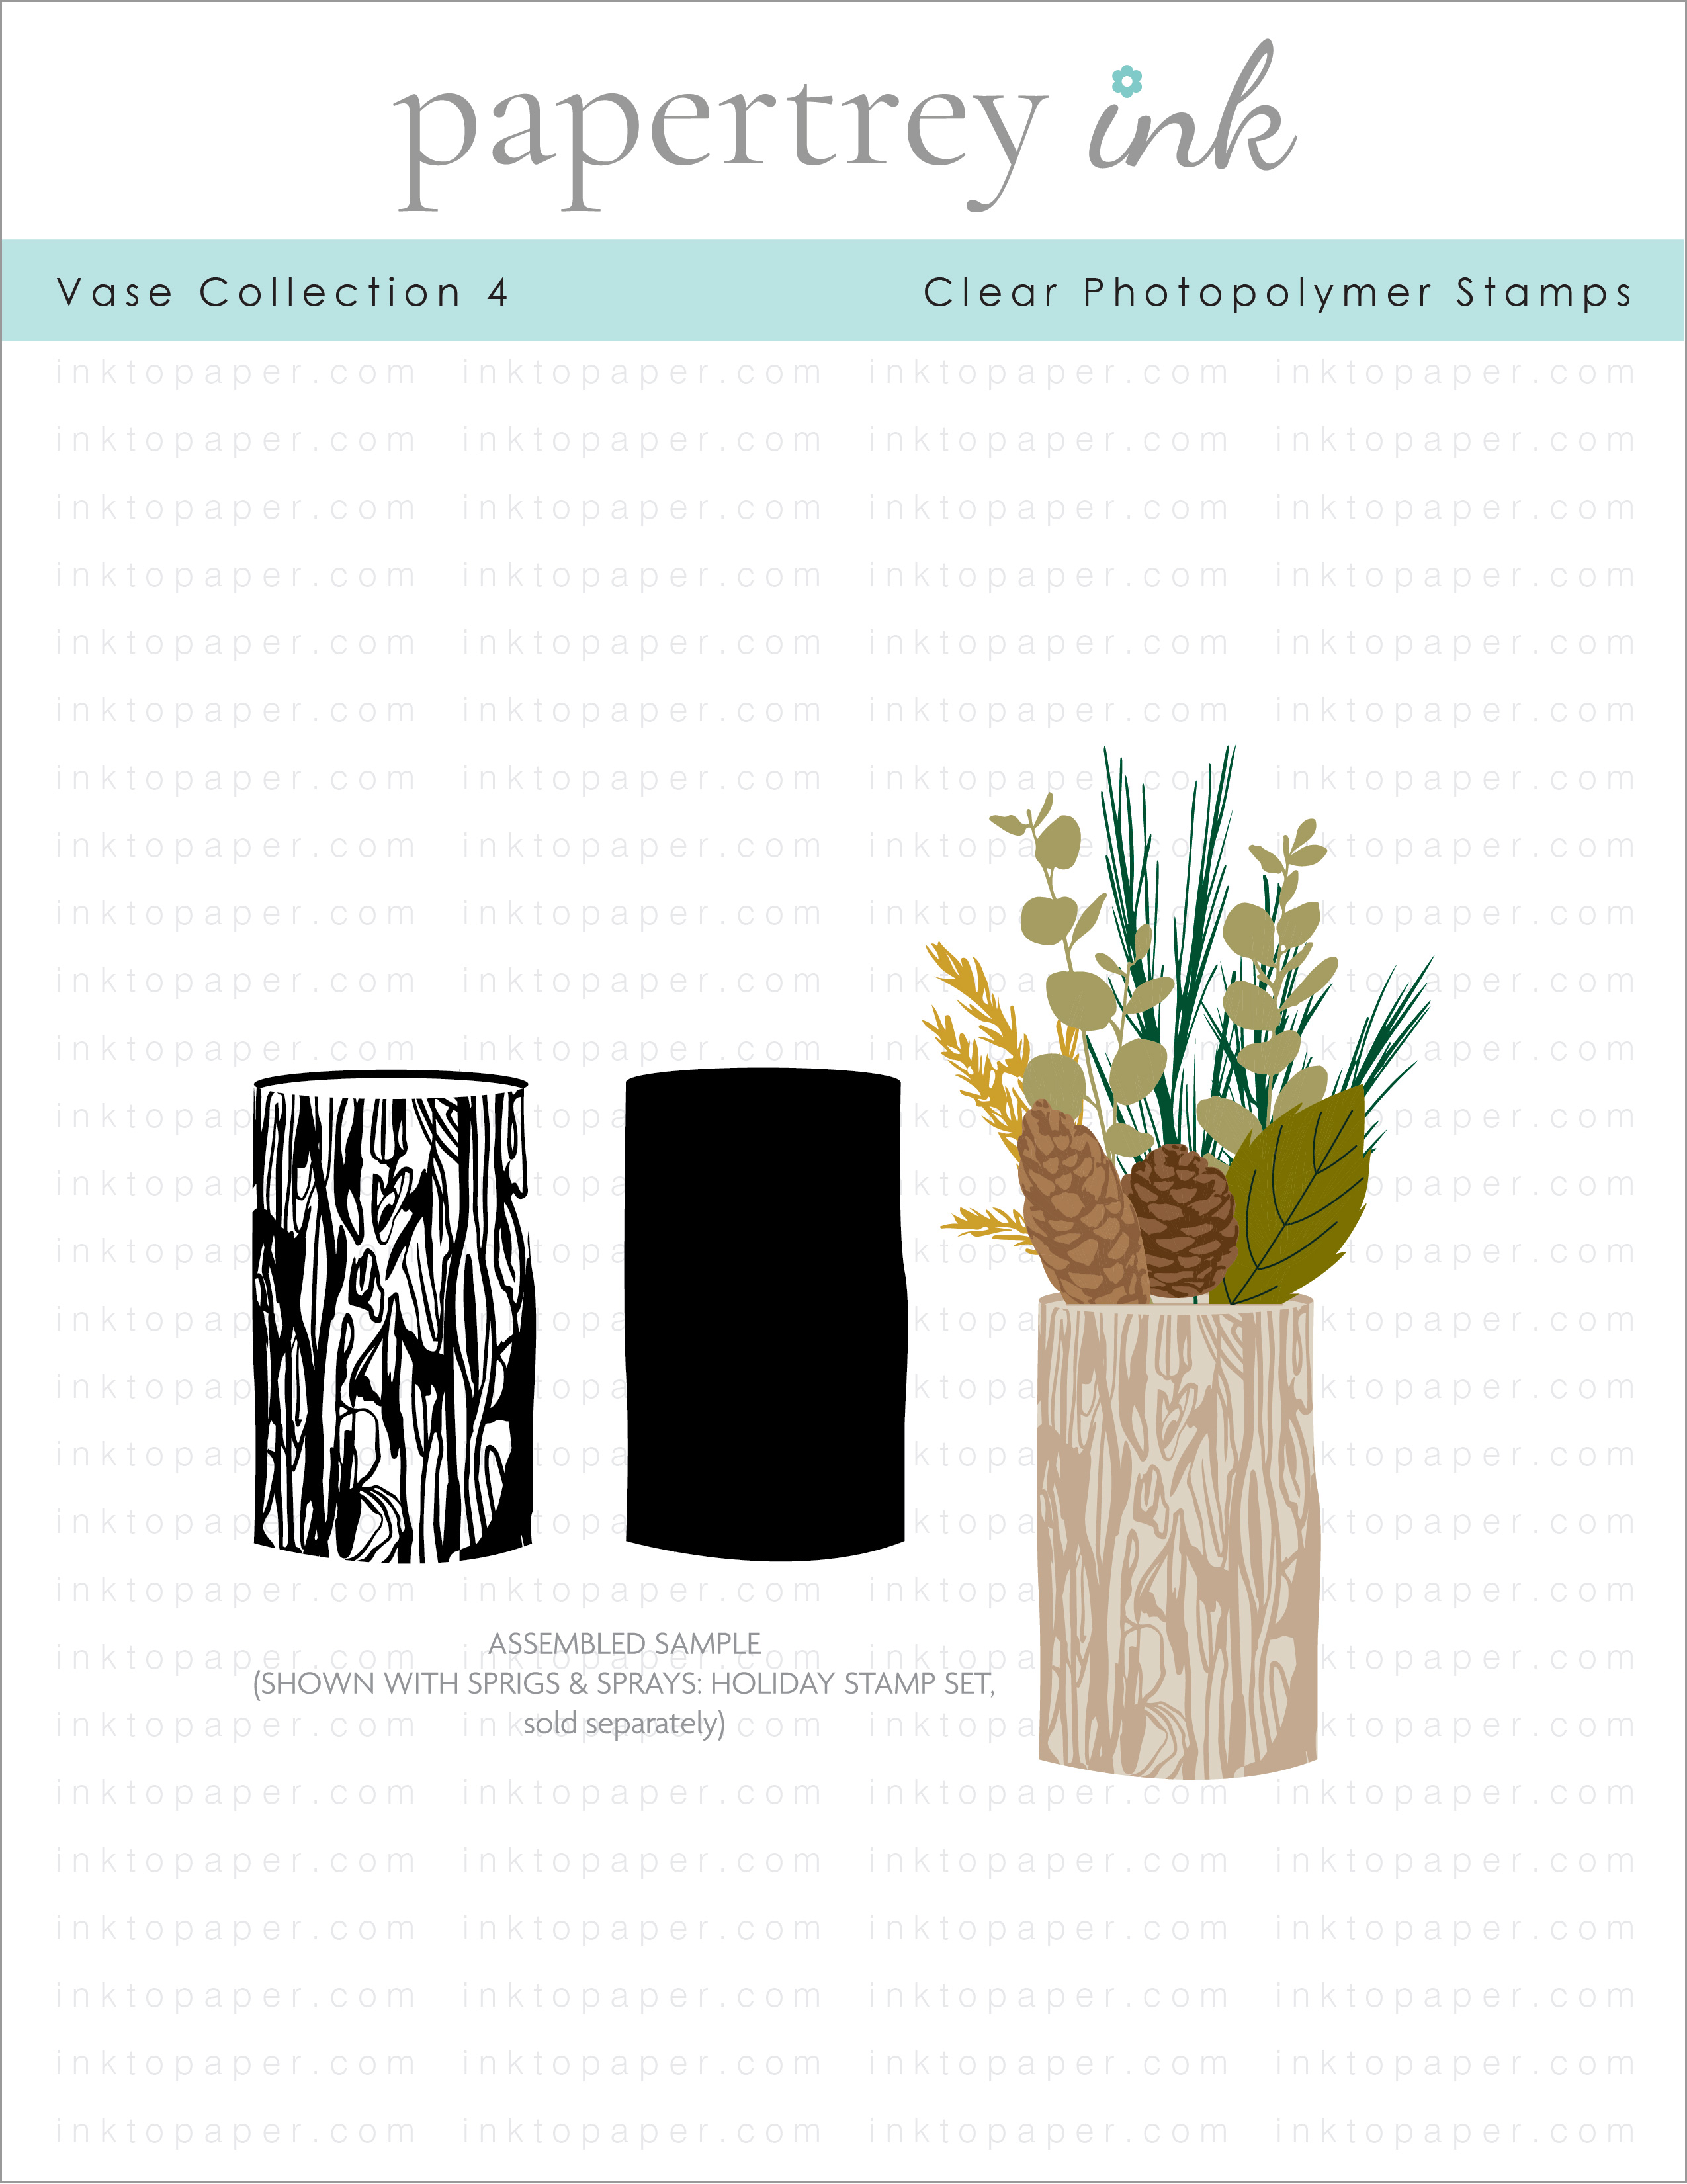 Vase Collection 4 Mini Stamp Set: Papertrey Ink